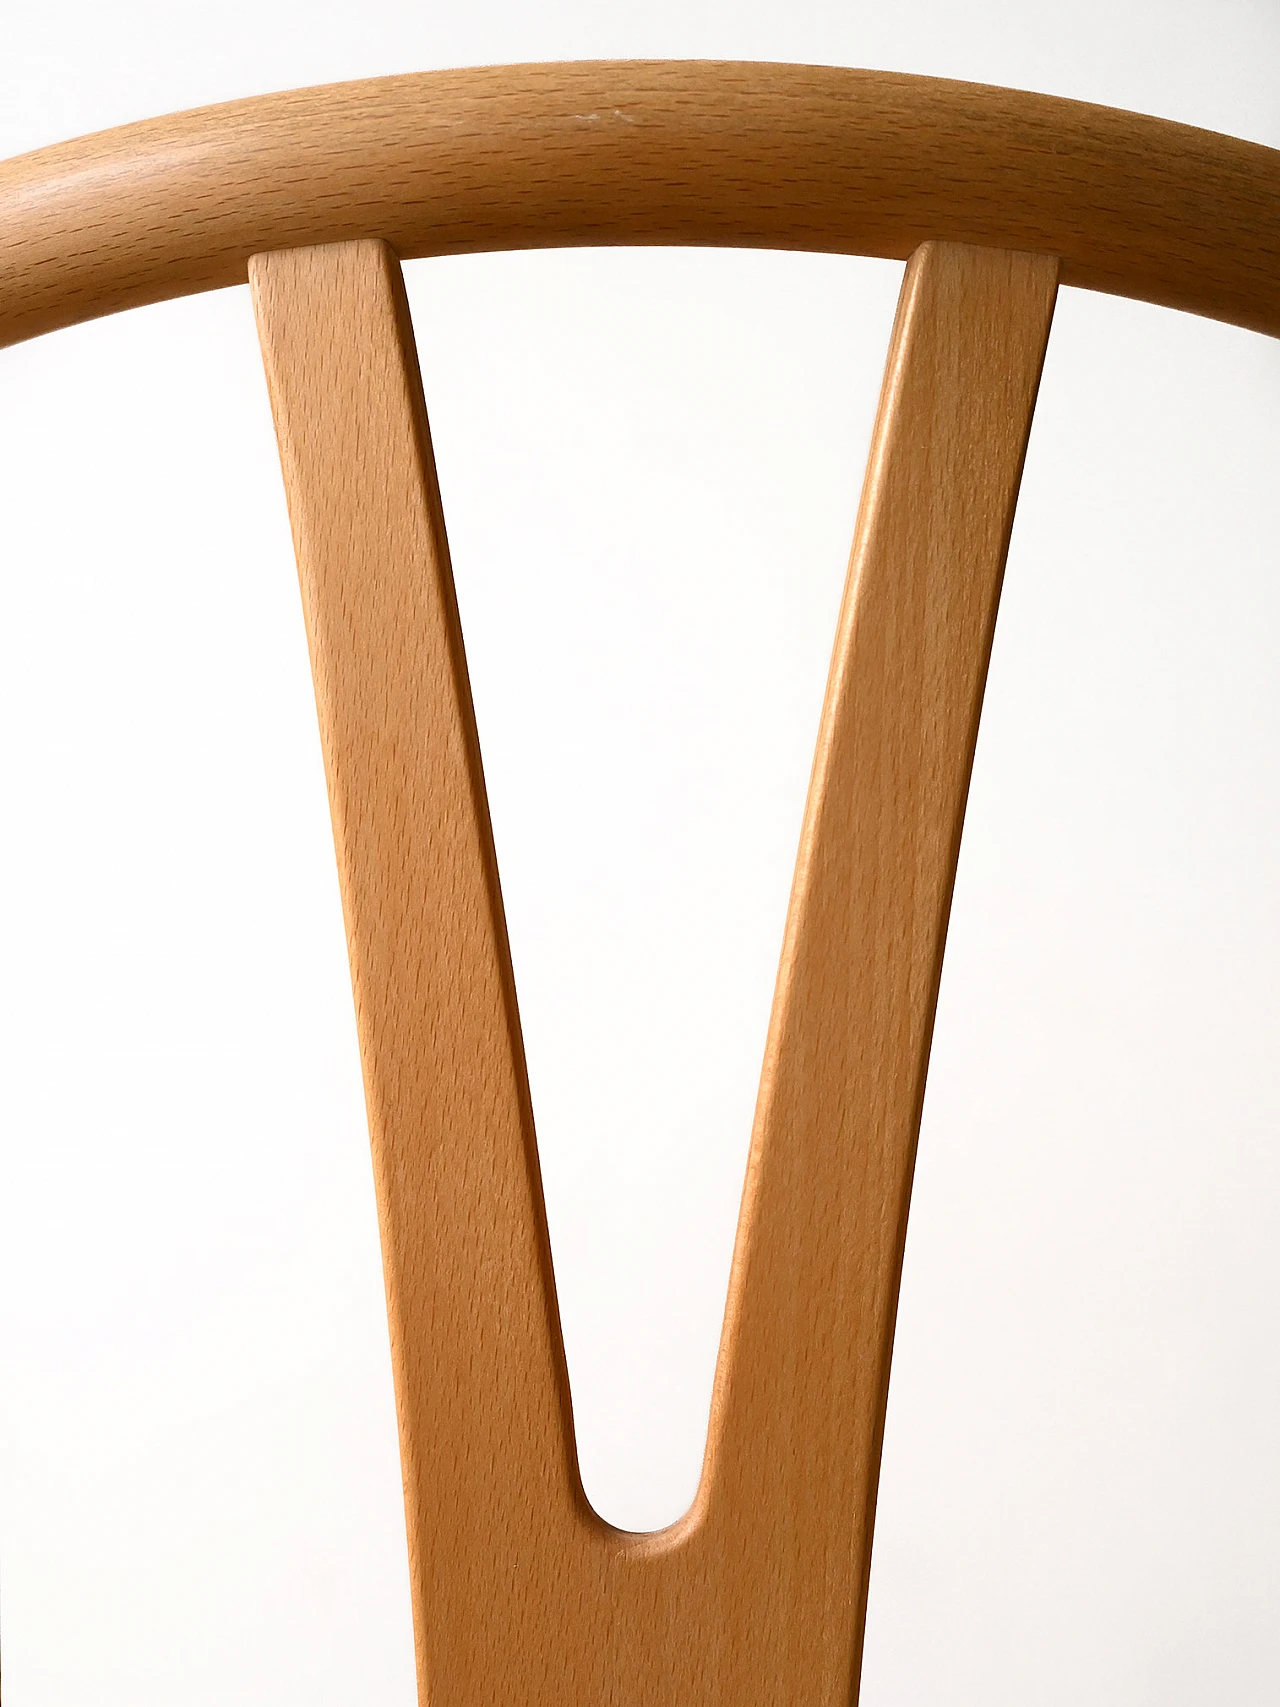 4 CH24 Wishbone Chair chairs by Hans J. Wegner for Carl Hansen & Søn 11